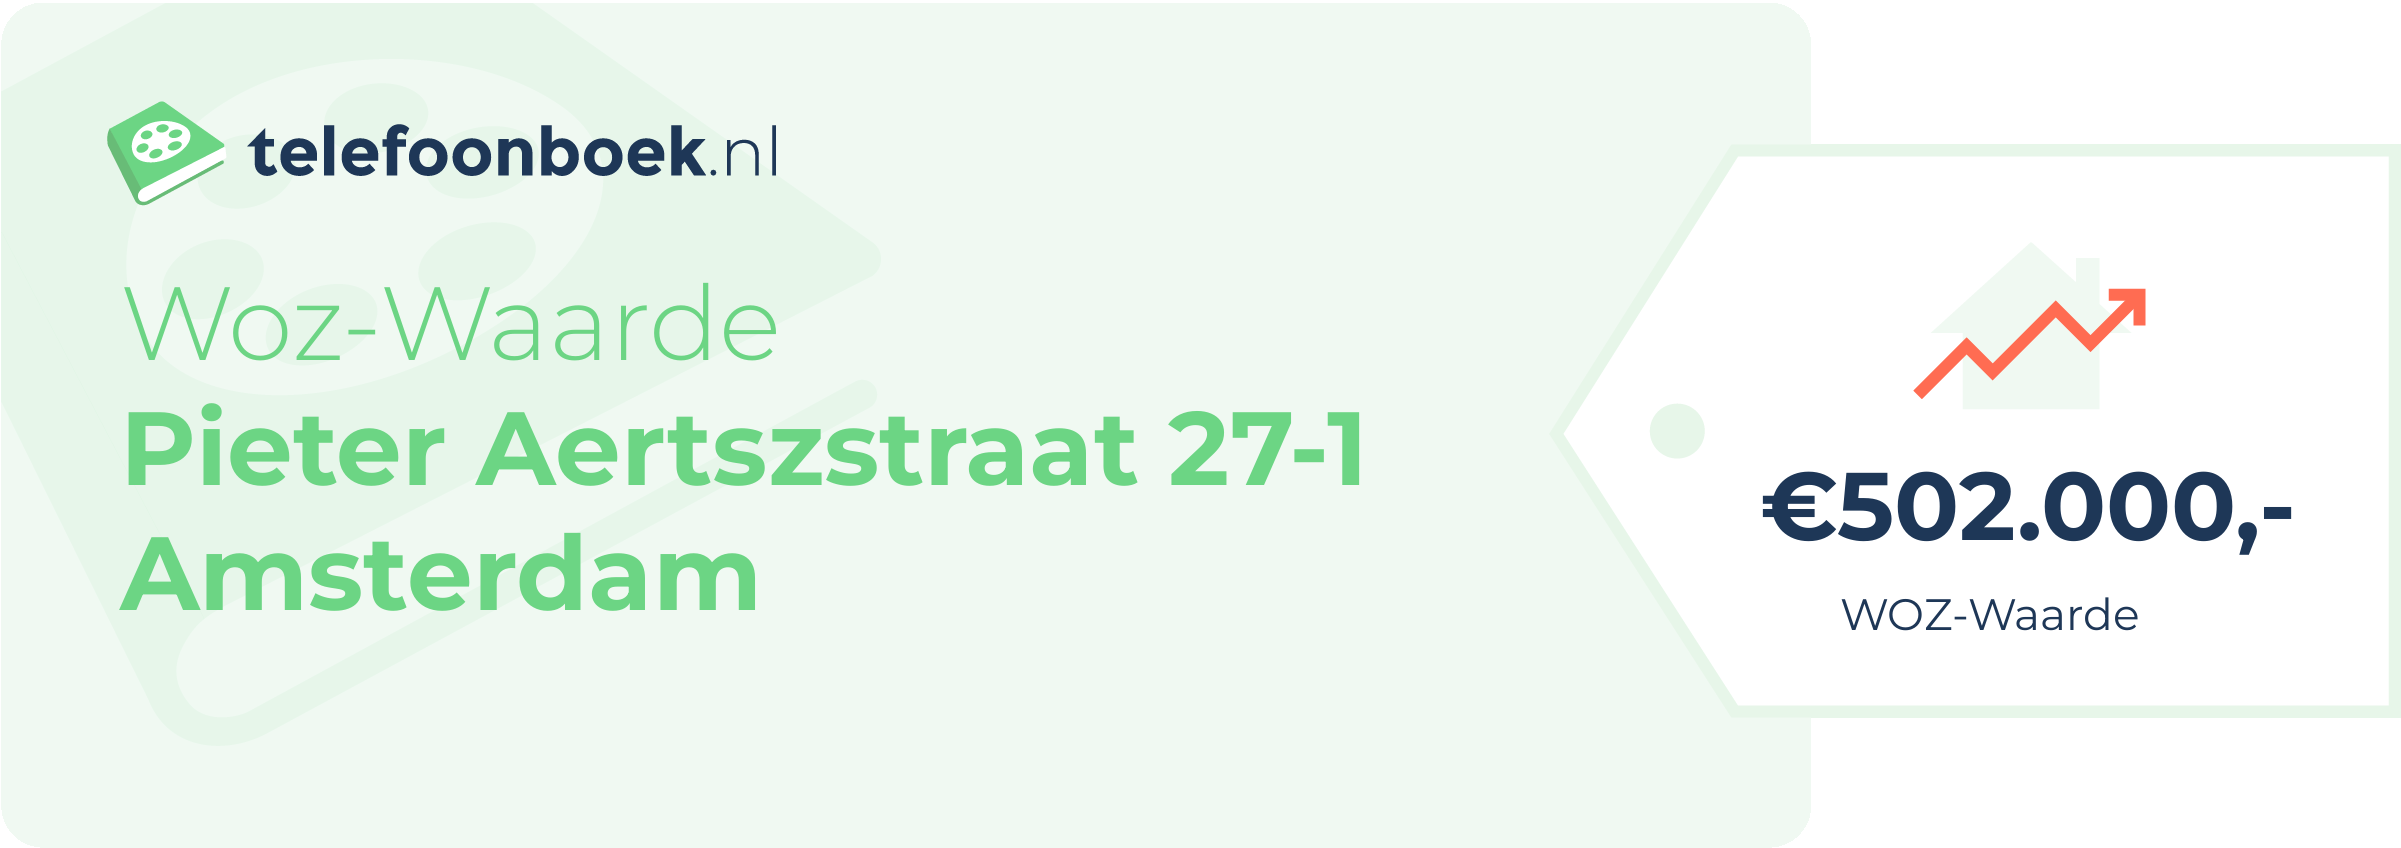 WOZ-waarde Pieter Aertszstraat 27-1 Amsterdam